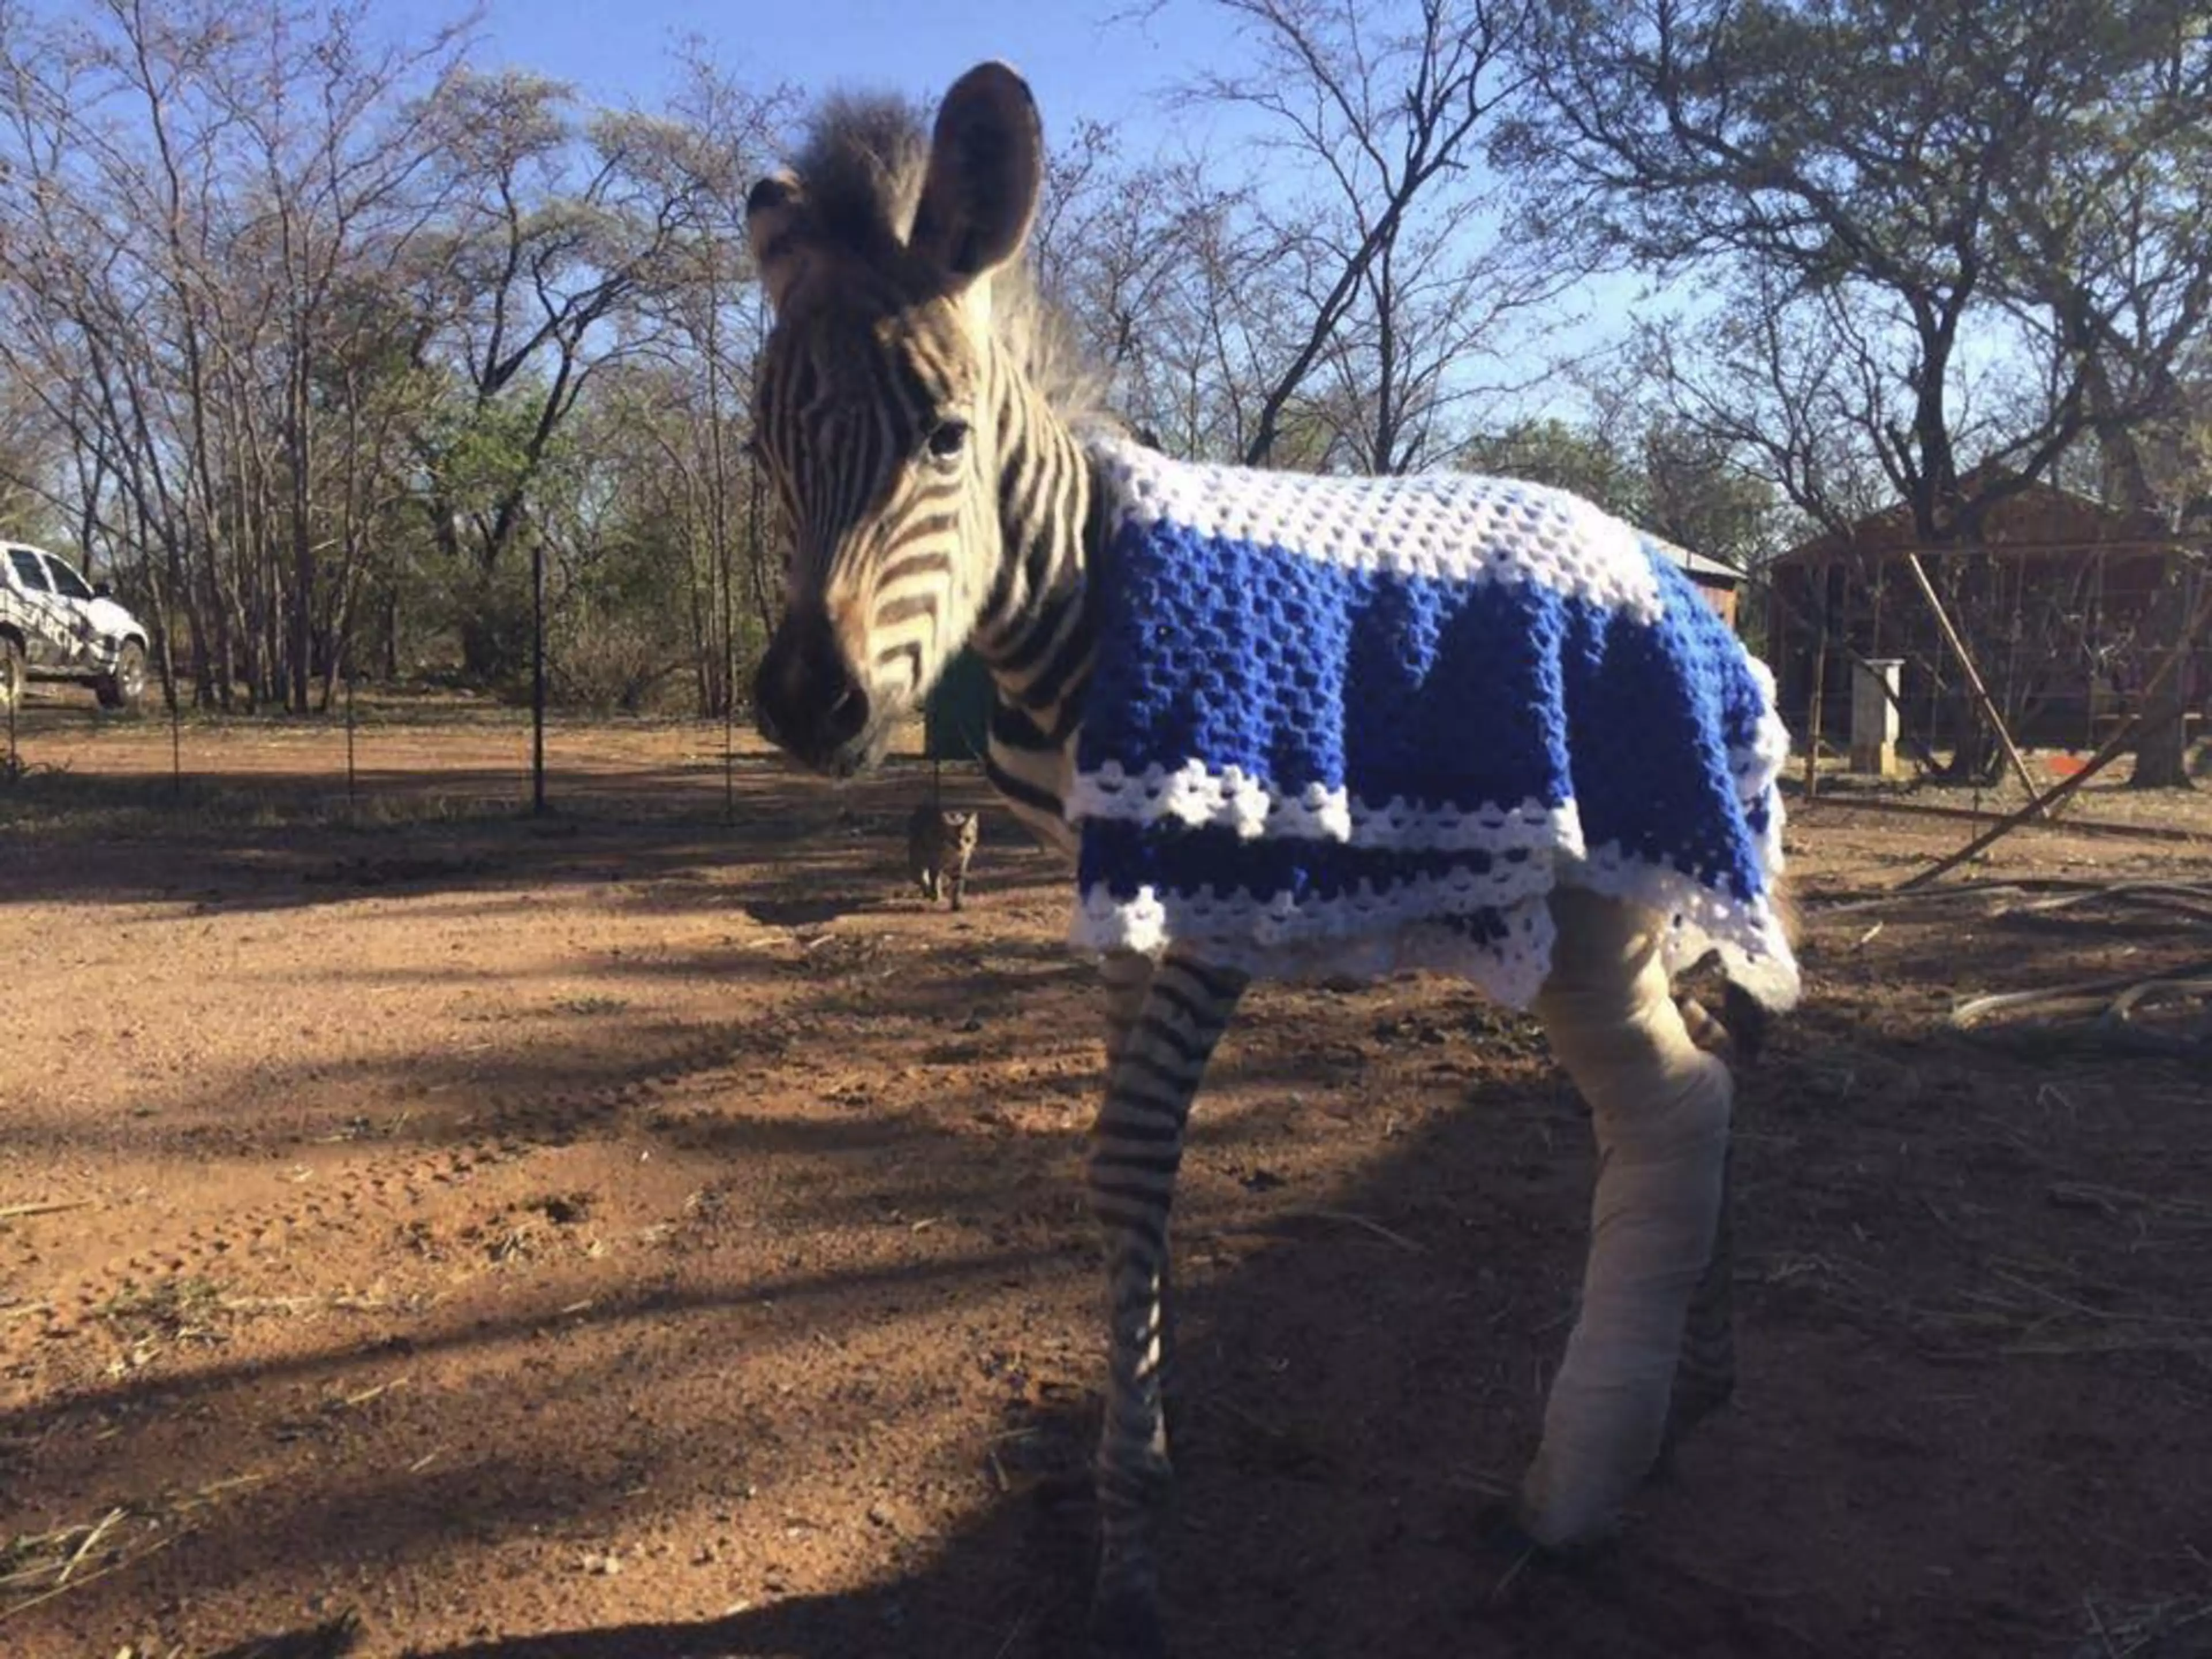 This zebra foal seems to be enjoying his blue crochet blanket (